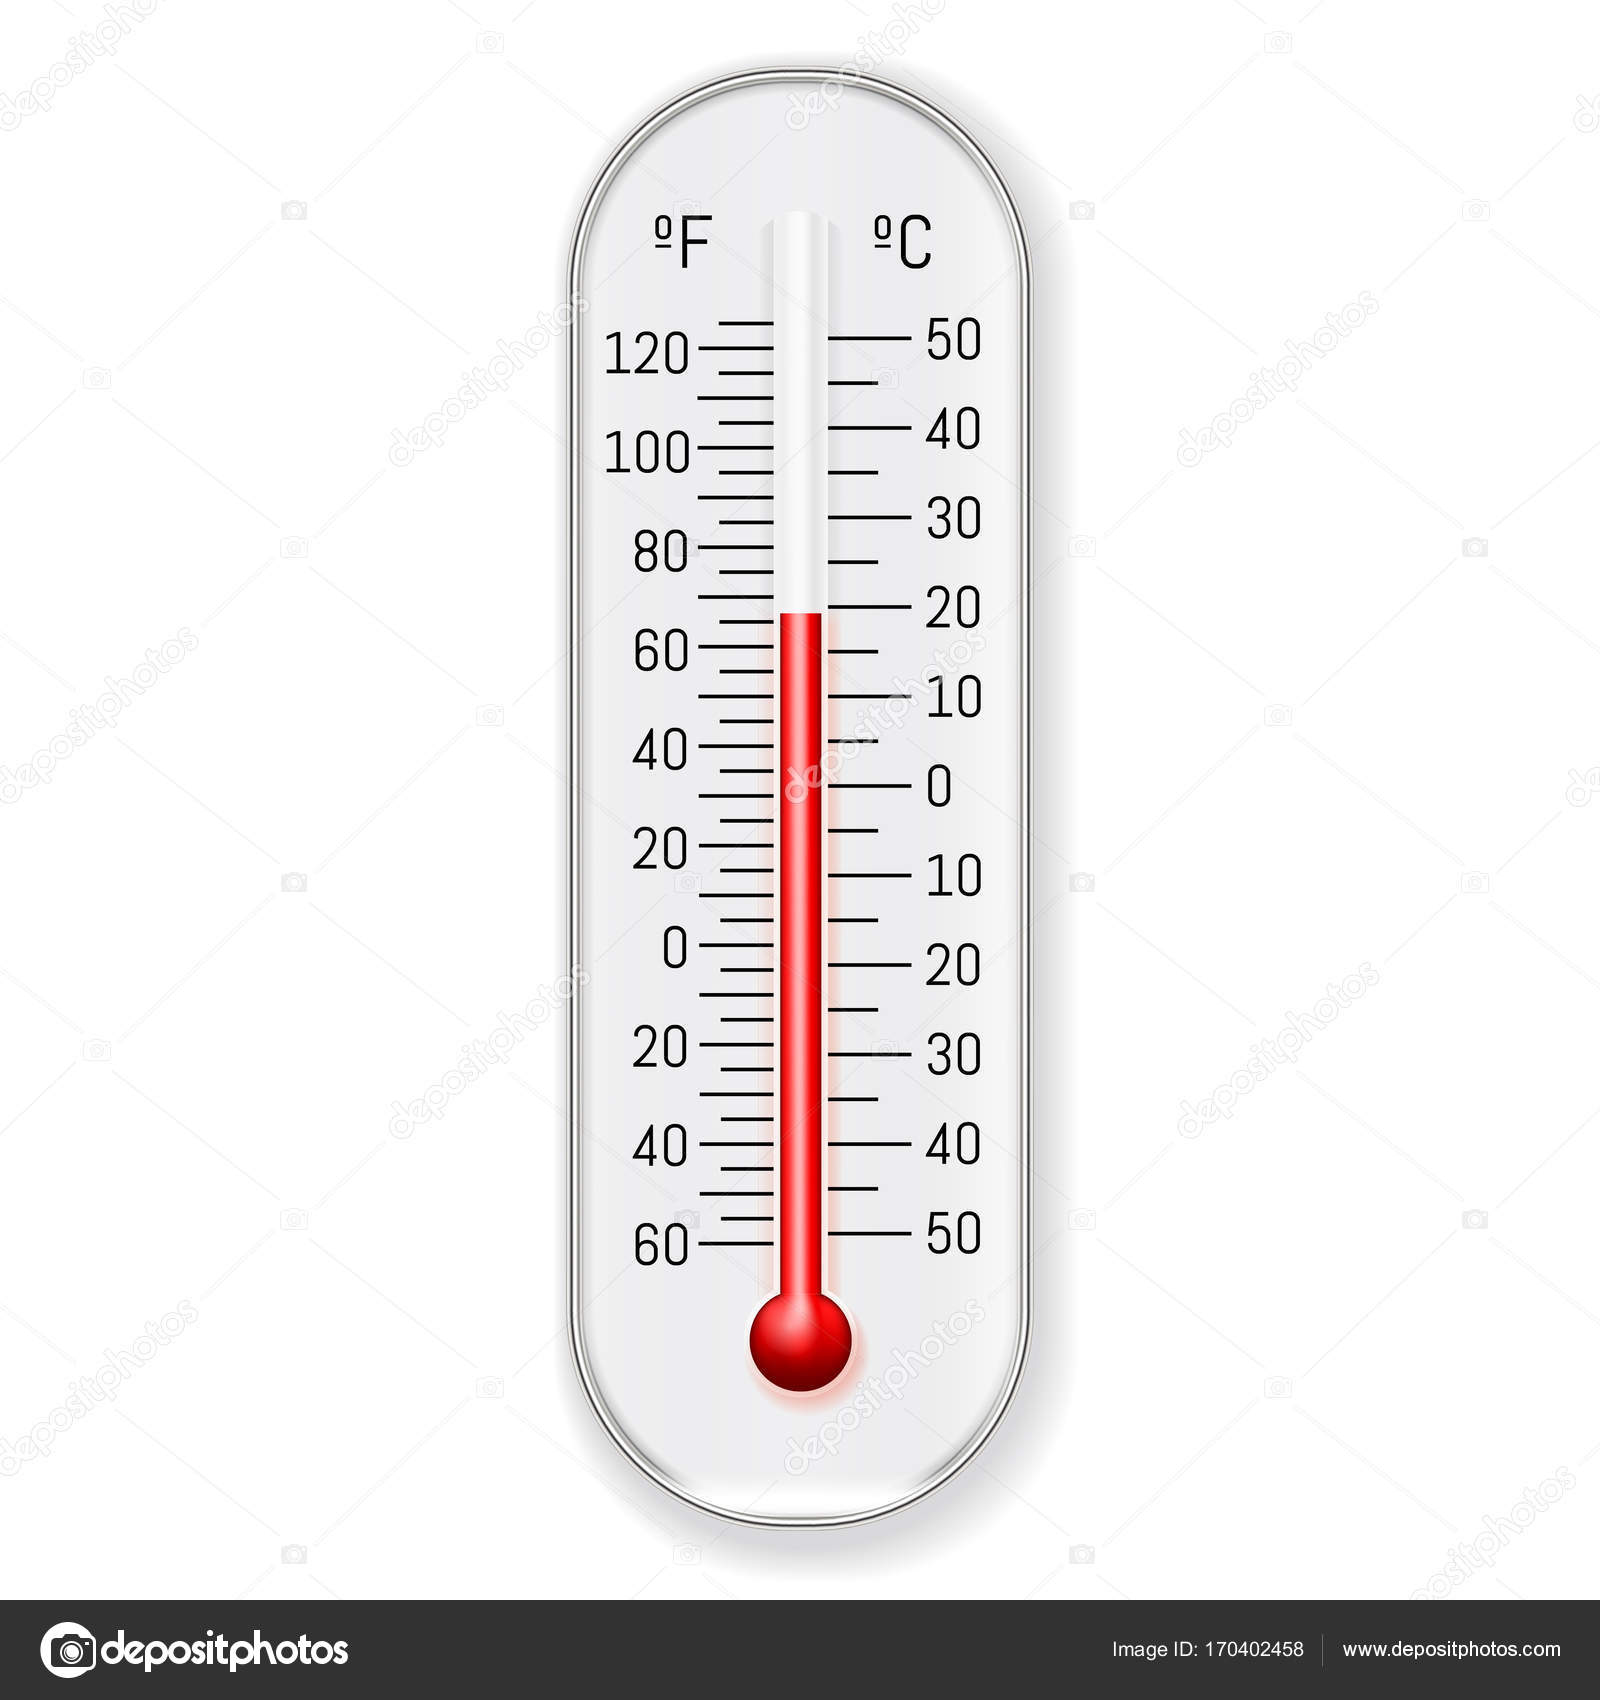 https://st3.depositphotos.com/2885805/17040/v/1600/depositphotos_170402458-stock-illustration-meteorology-thermometer-celsius-fahrenheit-realistic.jpg